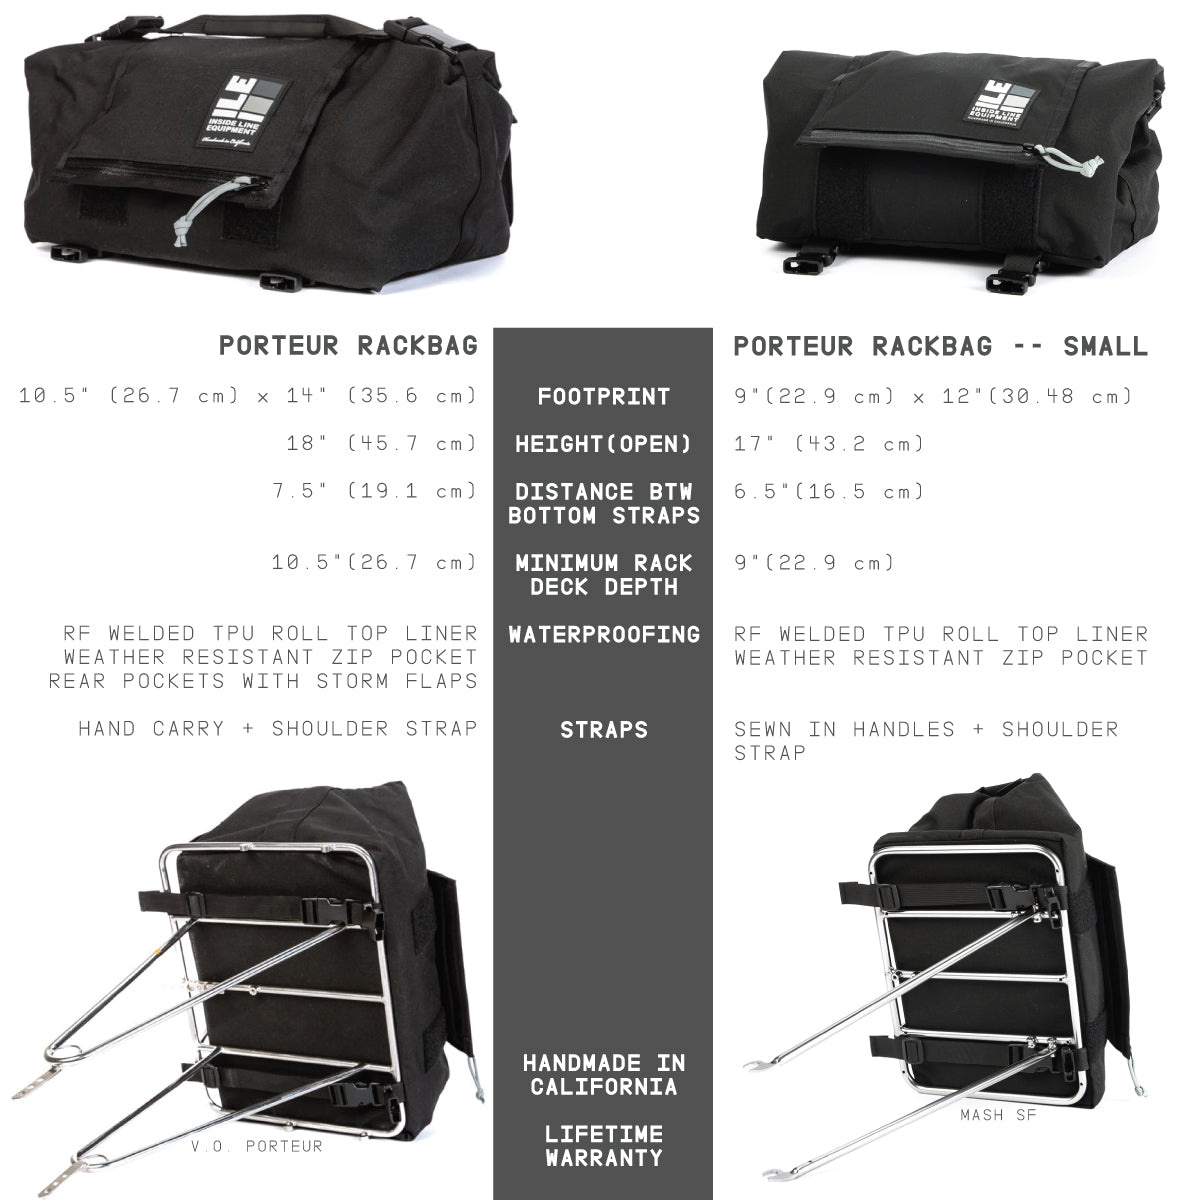 ILE porteur rack bag small cordura black - アクセサリー